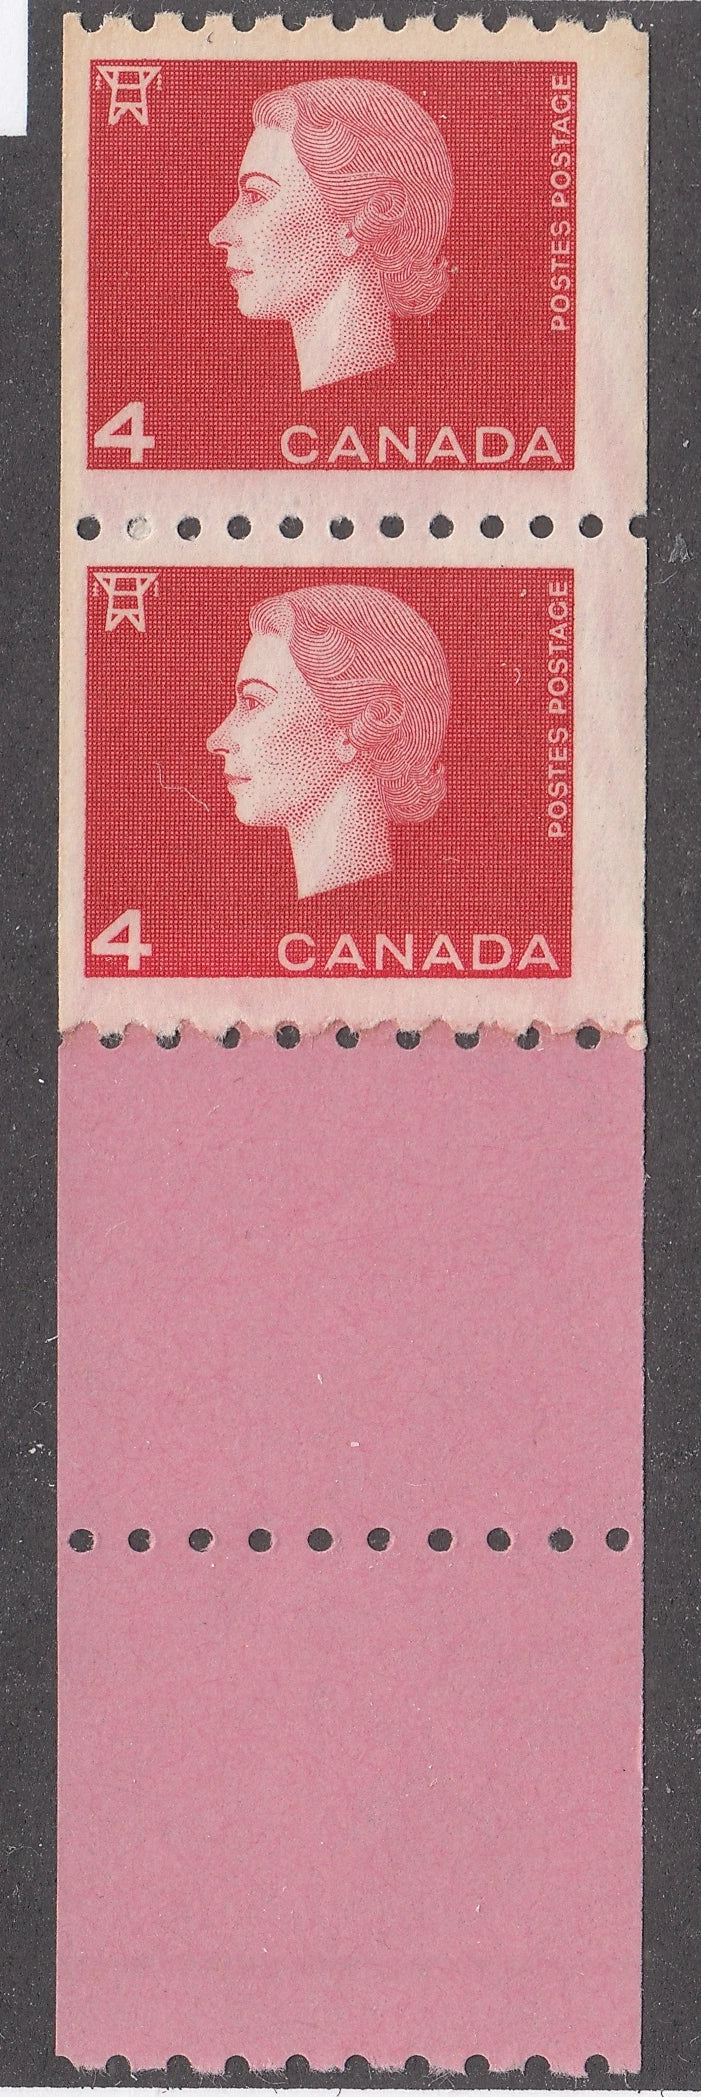 0408CA2103 - Canada #408 - Mint Coil Pair Starter